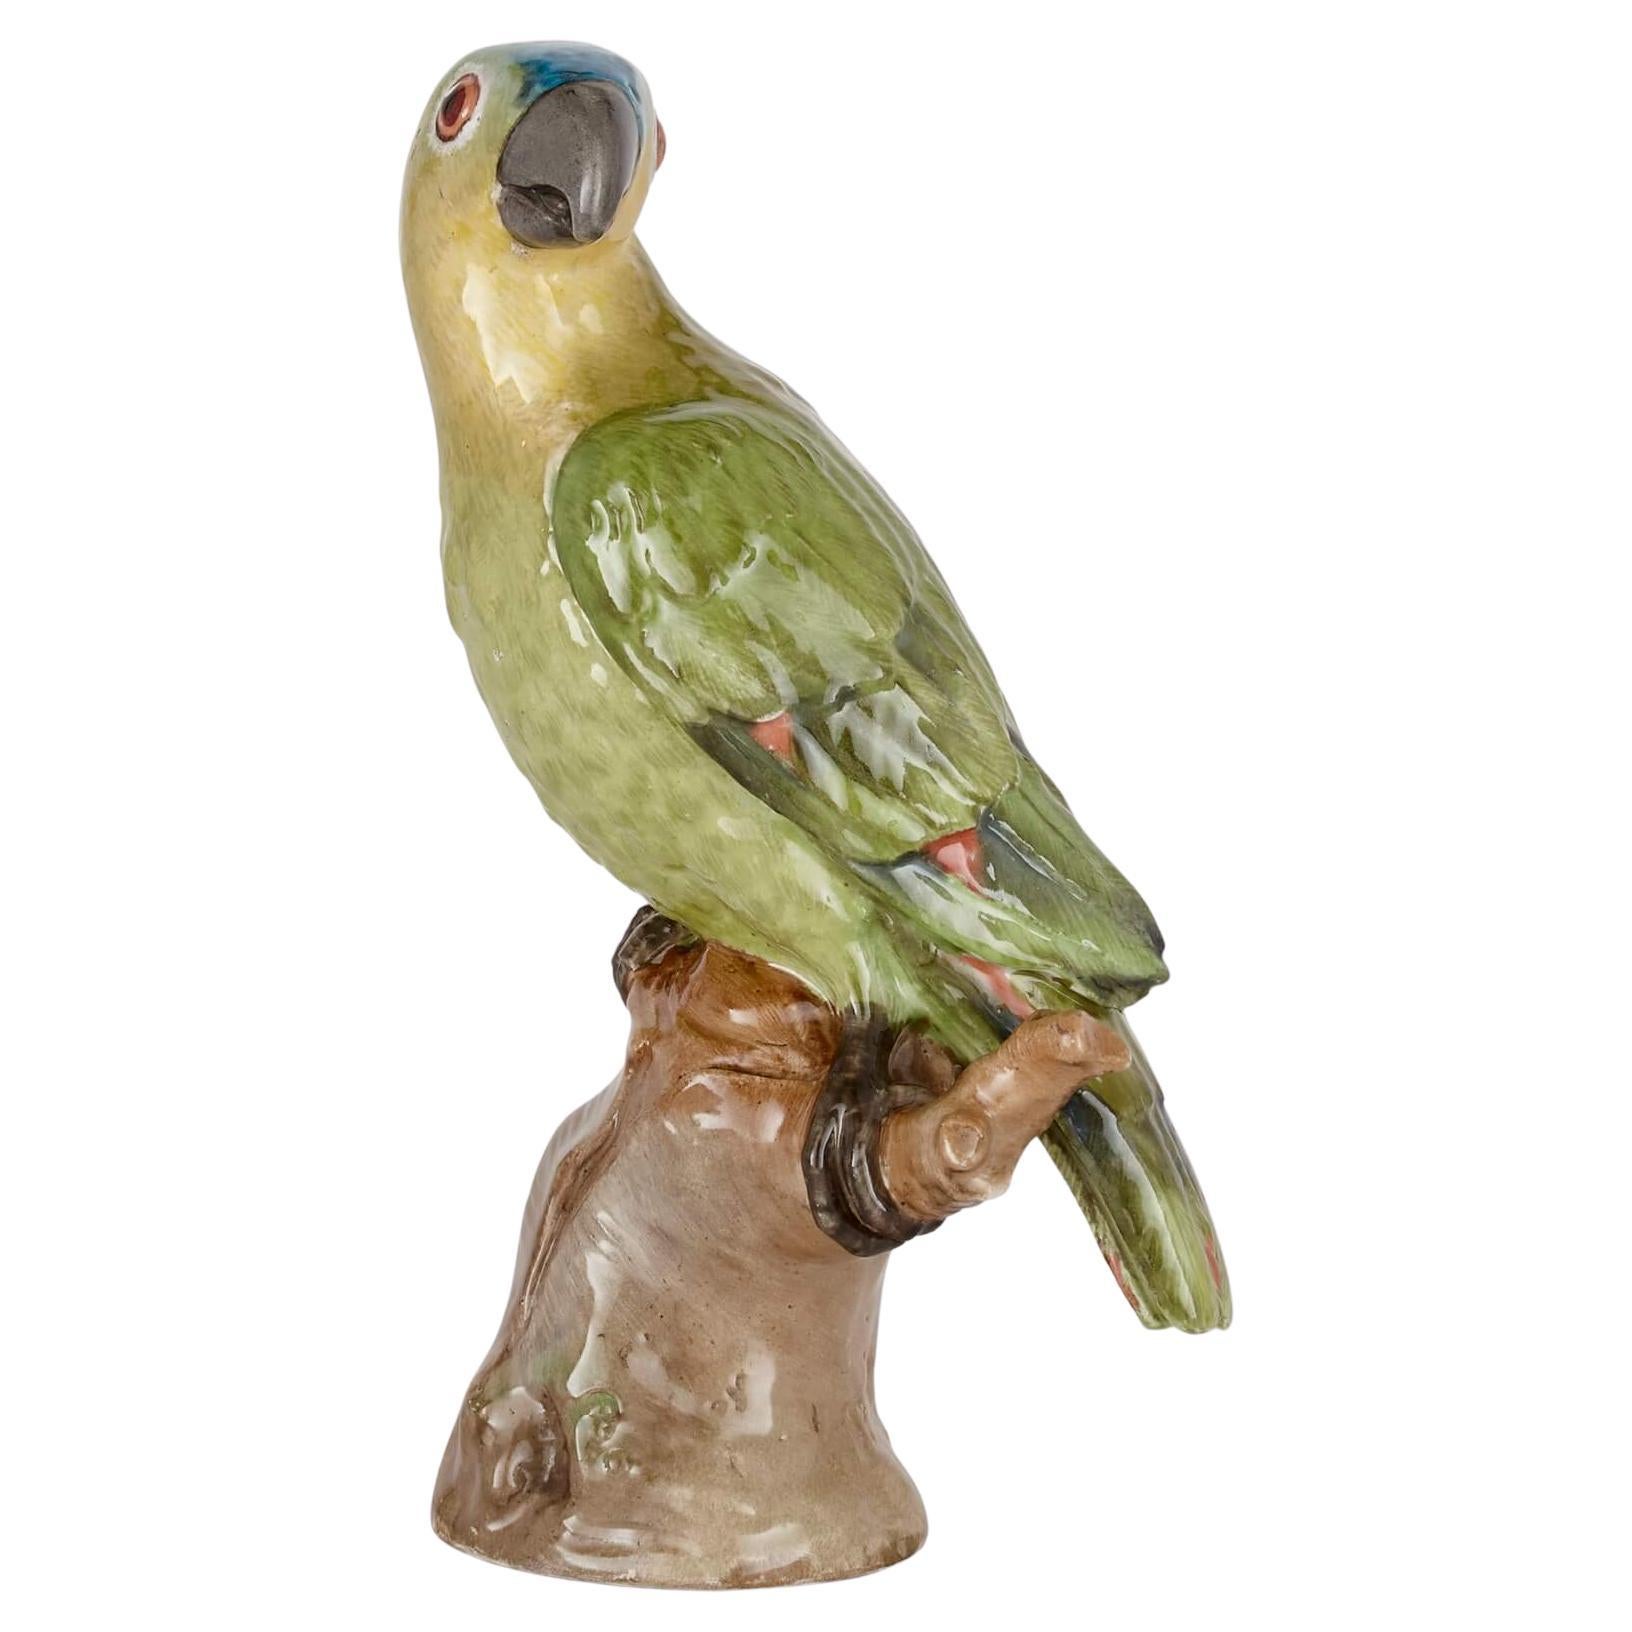 KPM Porcelain Model of a Parrot, Late 19th Century